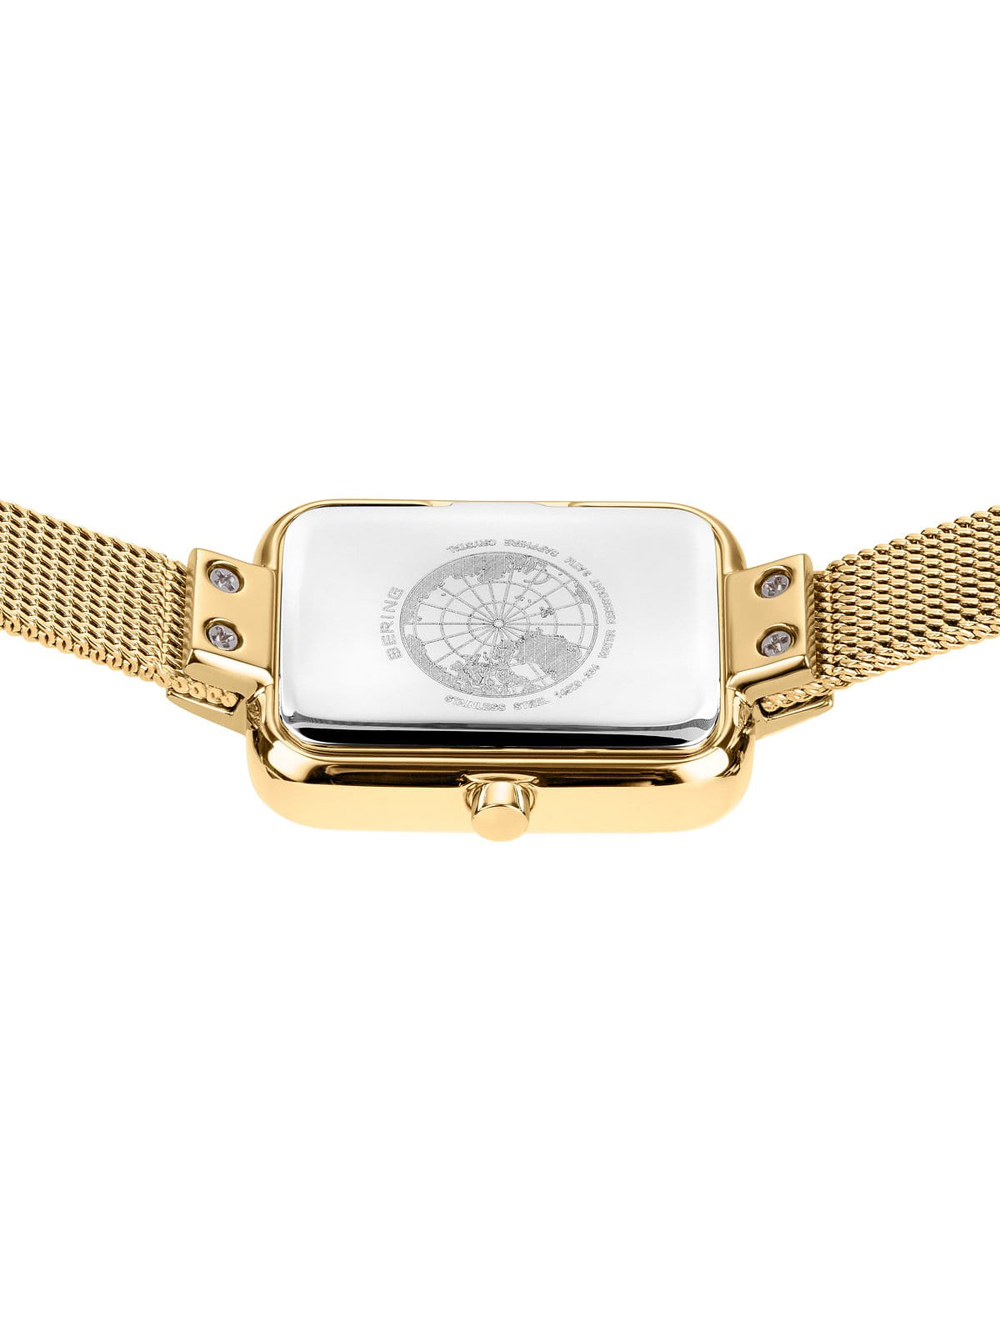 Zegarek damski Bering 14520-334 złoty